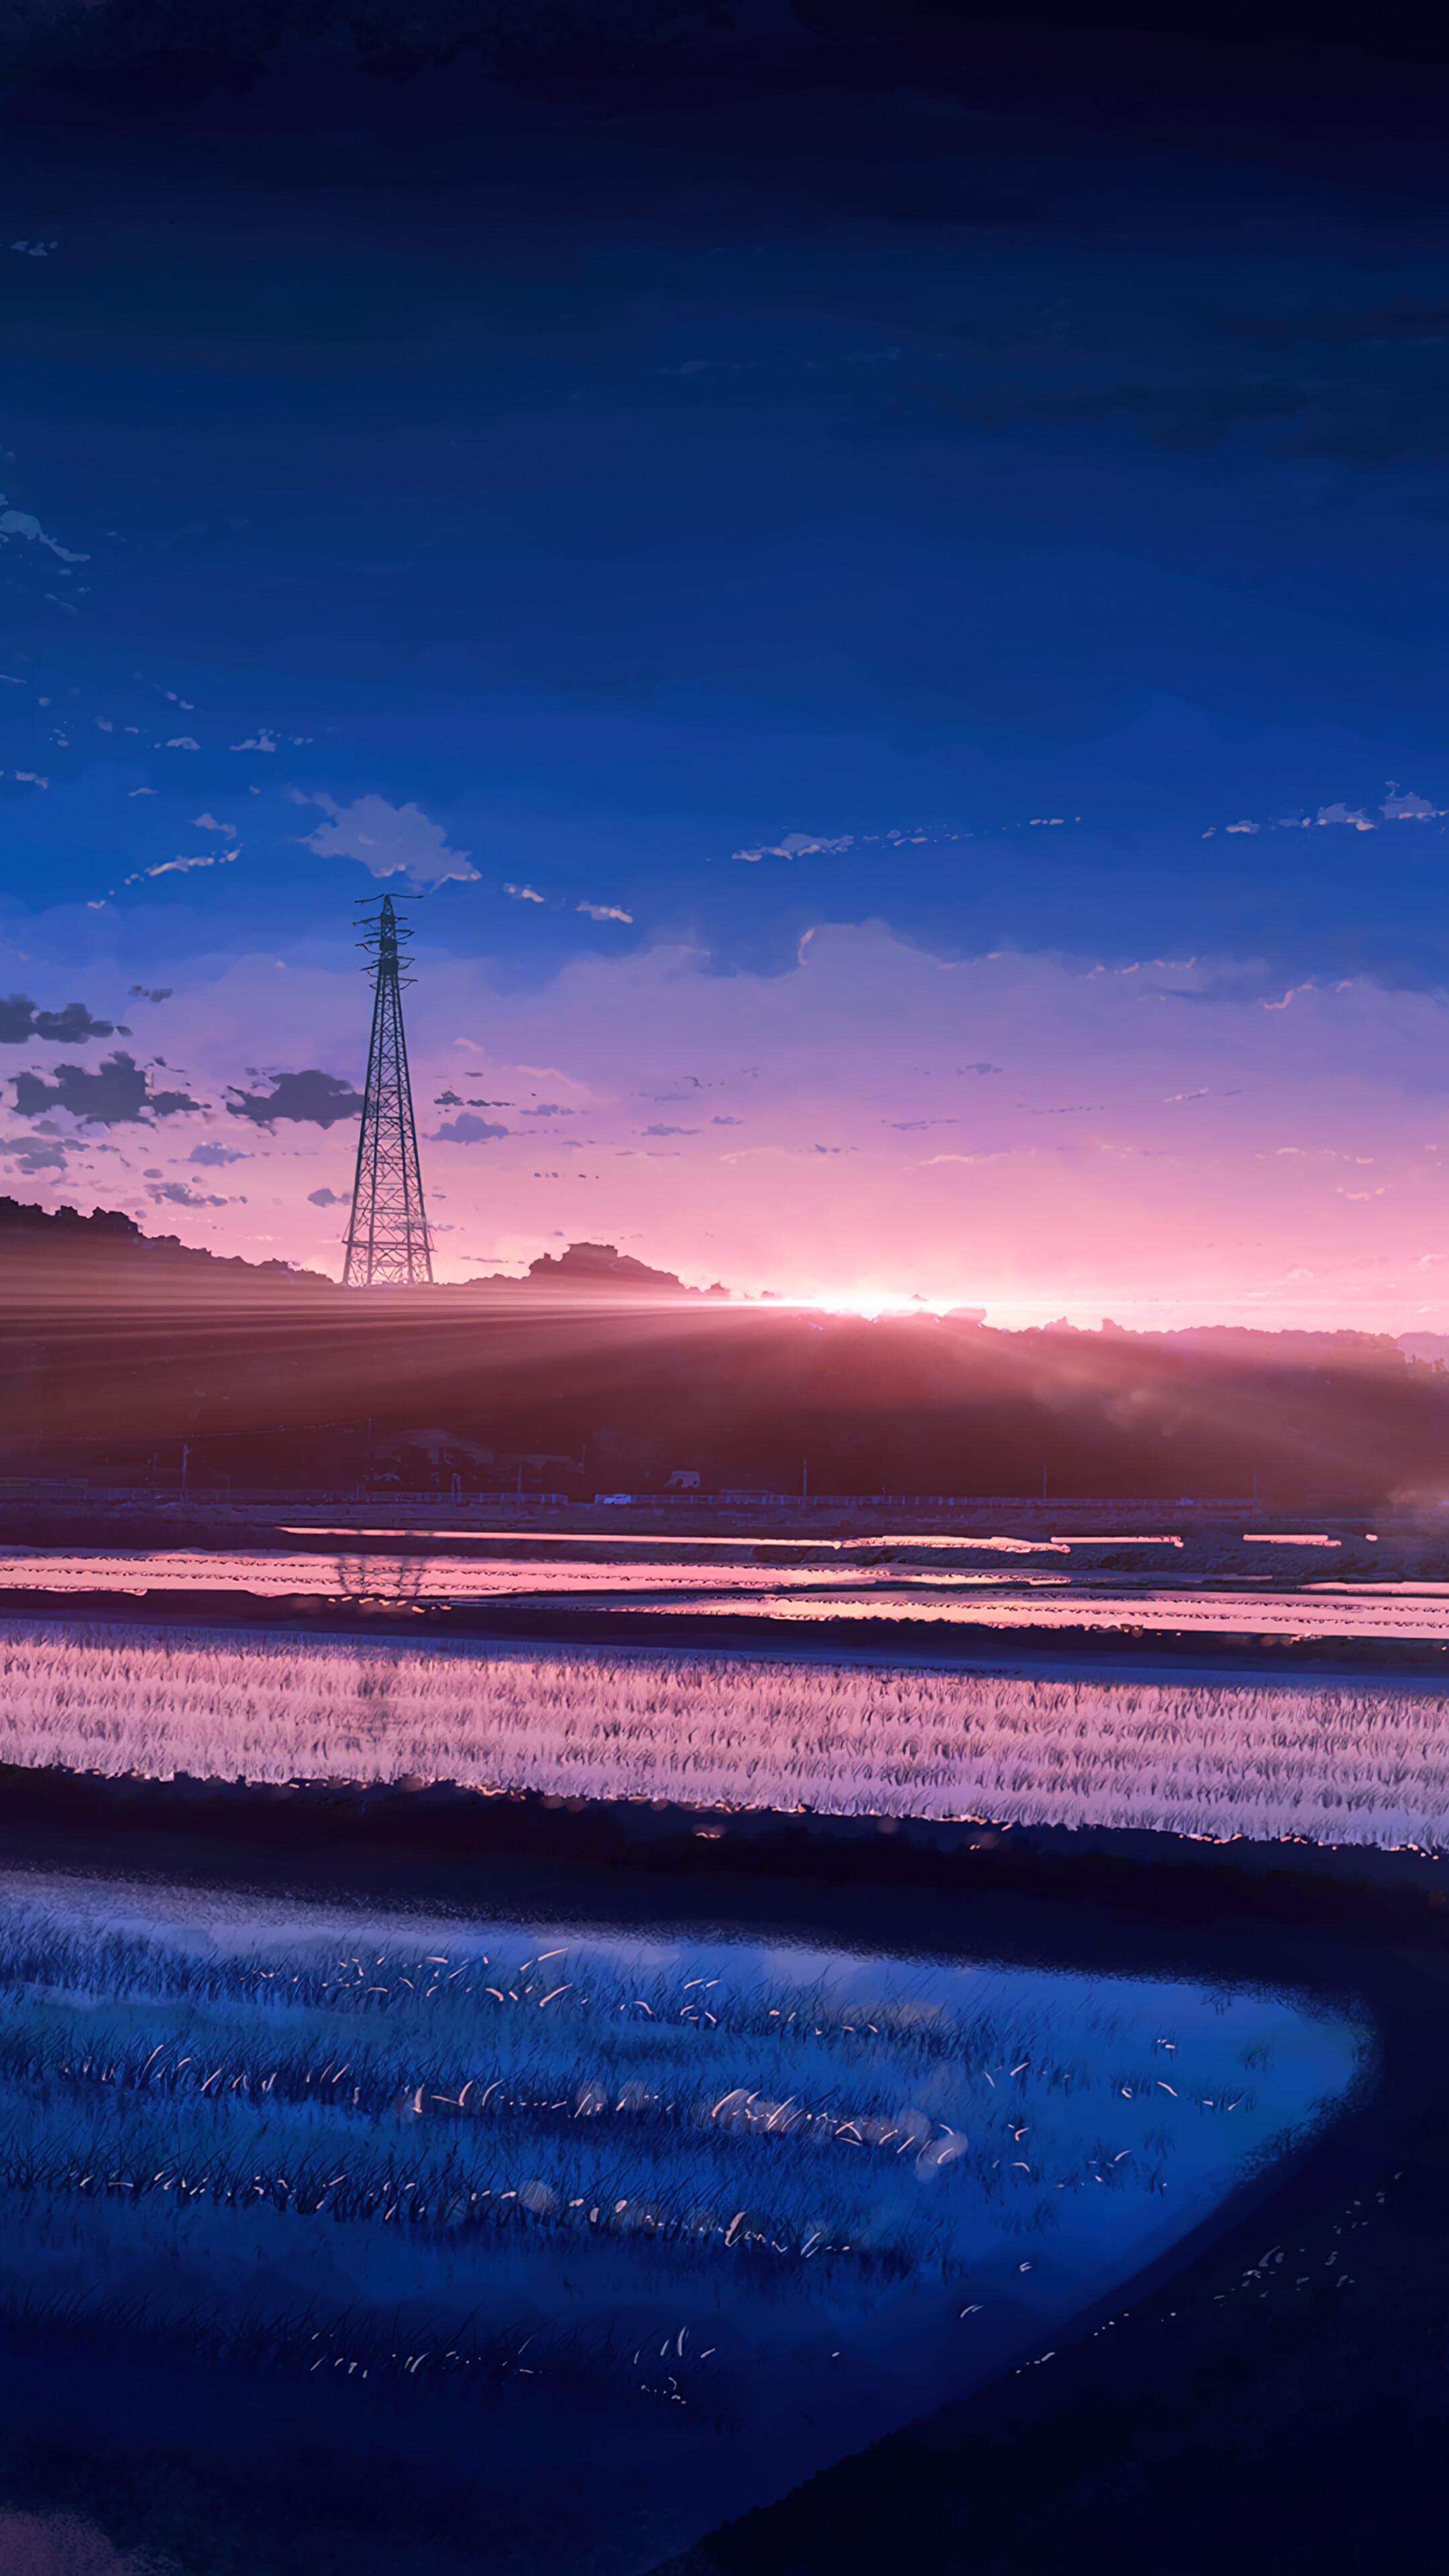 Sunrise Cherry Blossom Rice Field Anime Scenery 4k Wallpaper